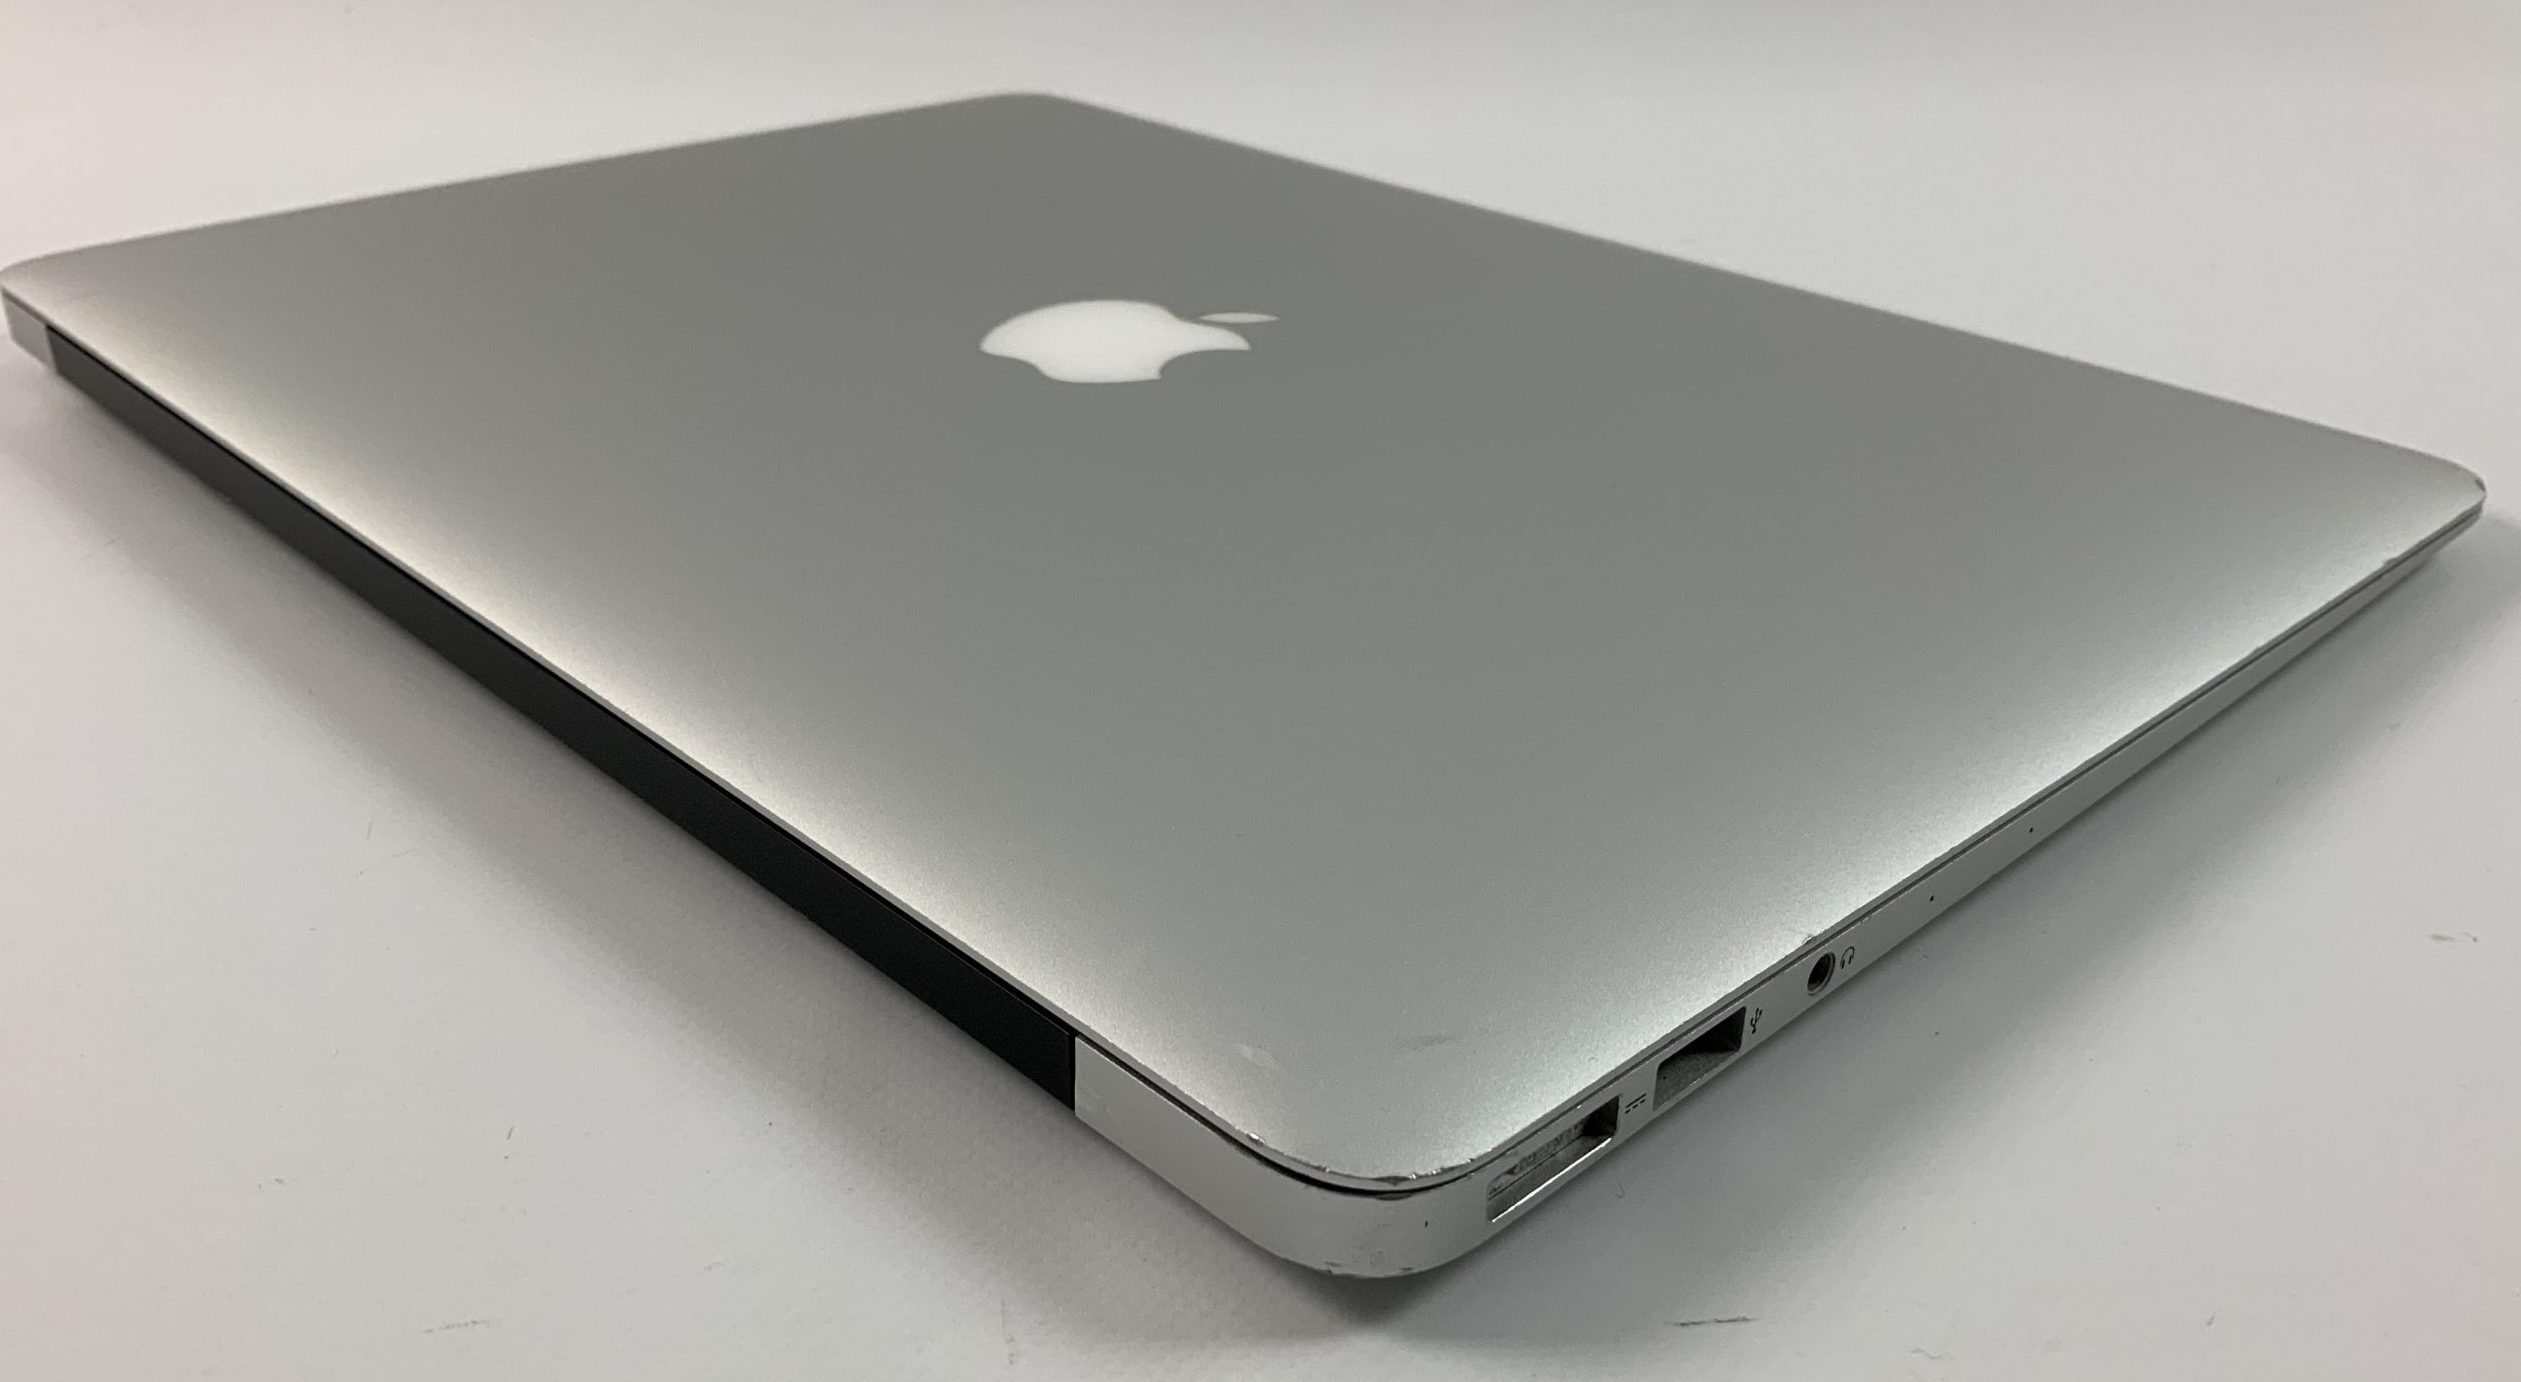 MacBook Air 13" Early 2015 (Intel Core i5 1.6 GHz 8 GB RAM 128 GB SSD), Intel Core i5 1.6 GHz, 8 GB RAM, 128 GB SSD, immagine 4